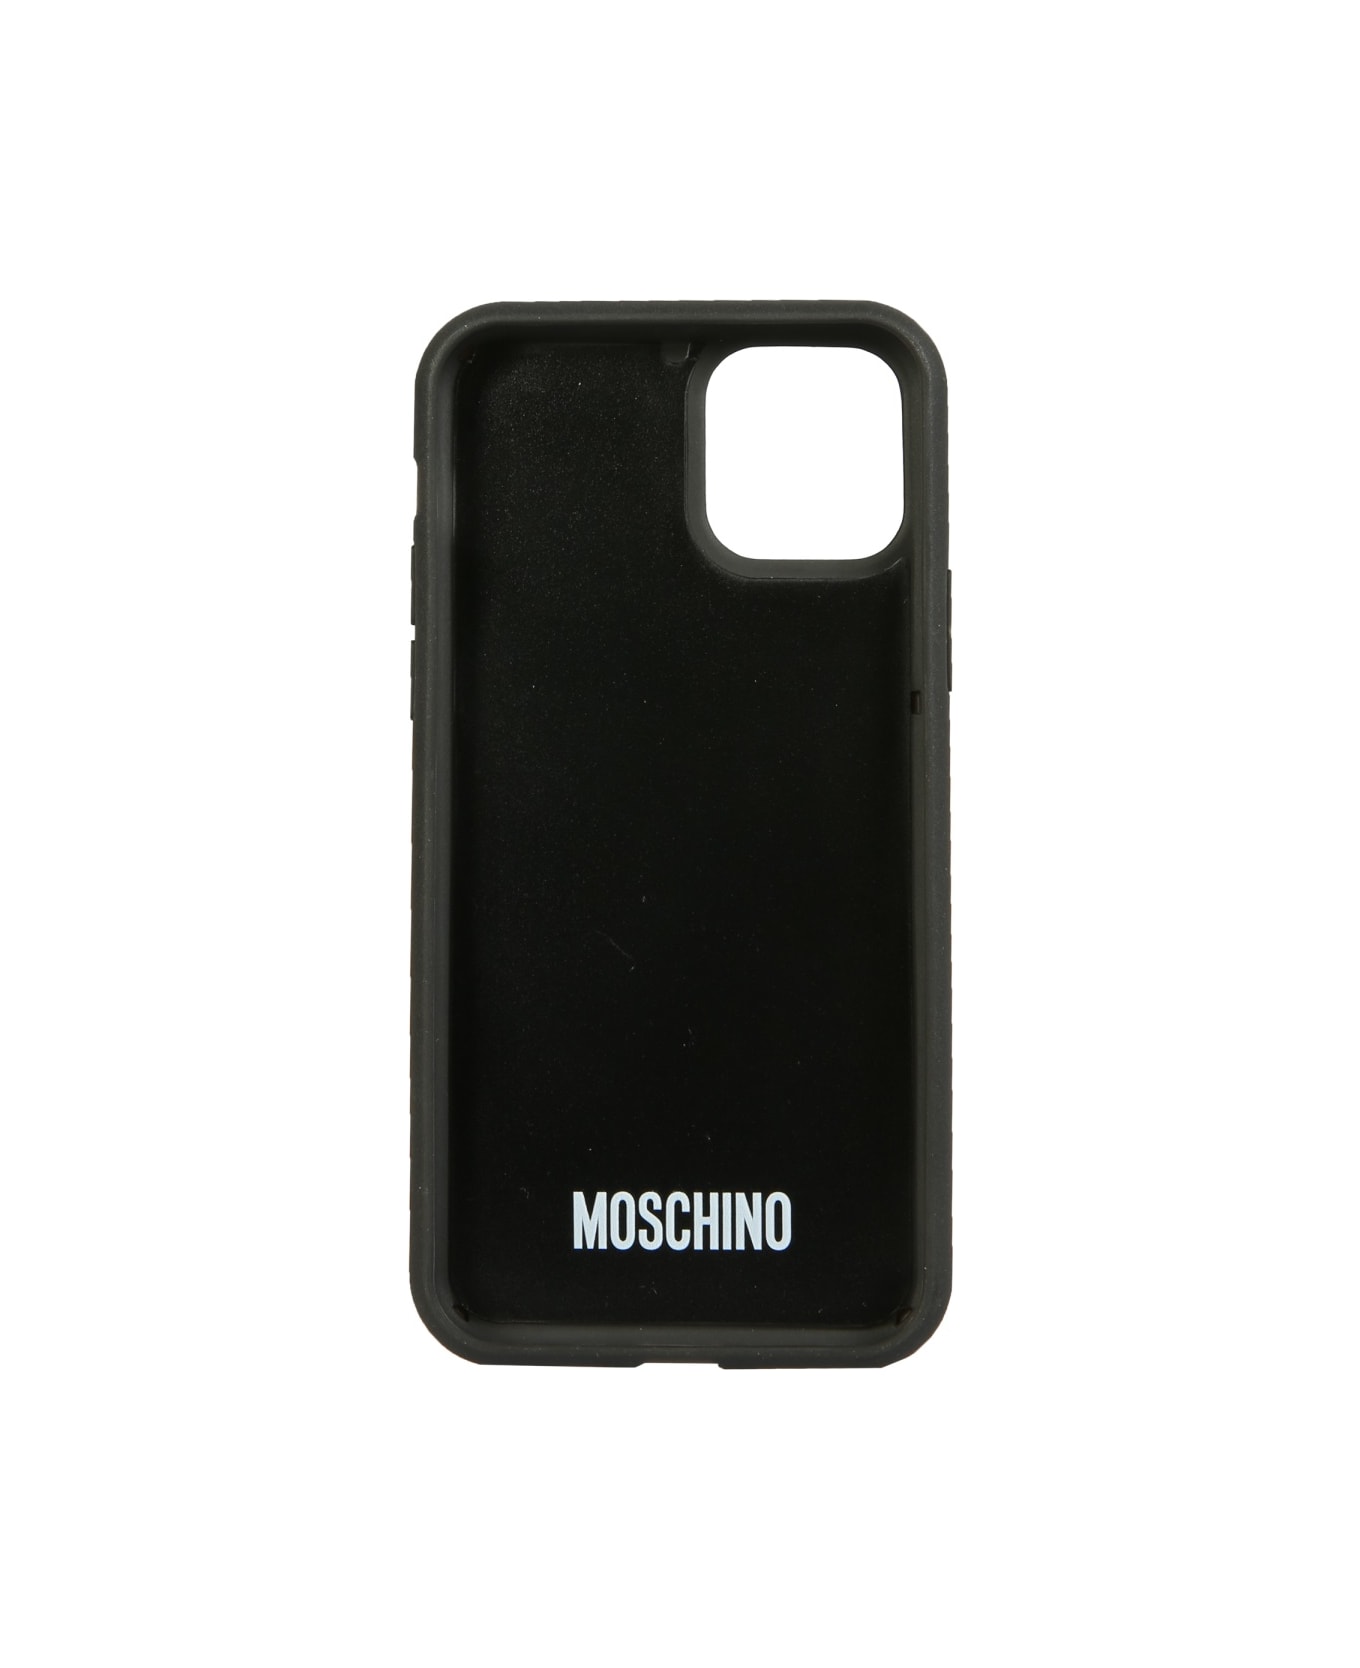 Moschino Iphone 11 Pro Italian Slogan Cover - MULTICOLOUR デジタルアクセサリー